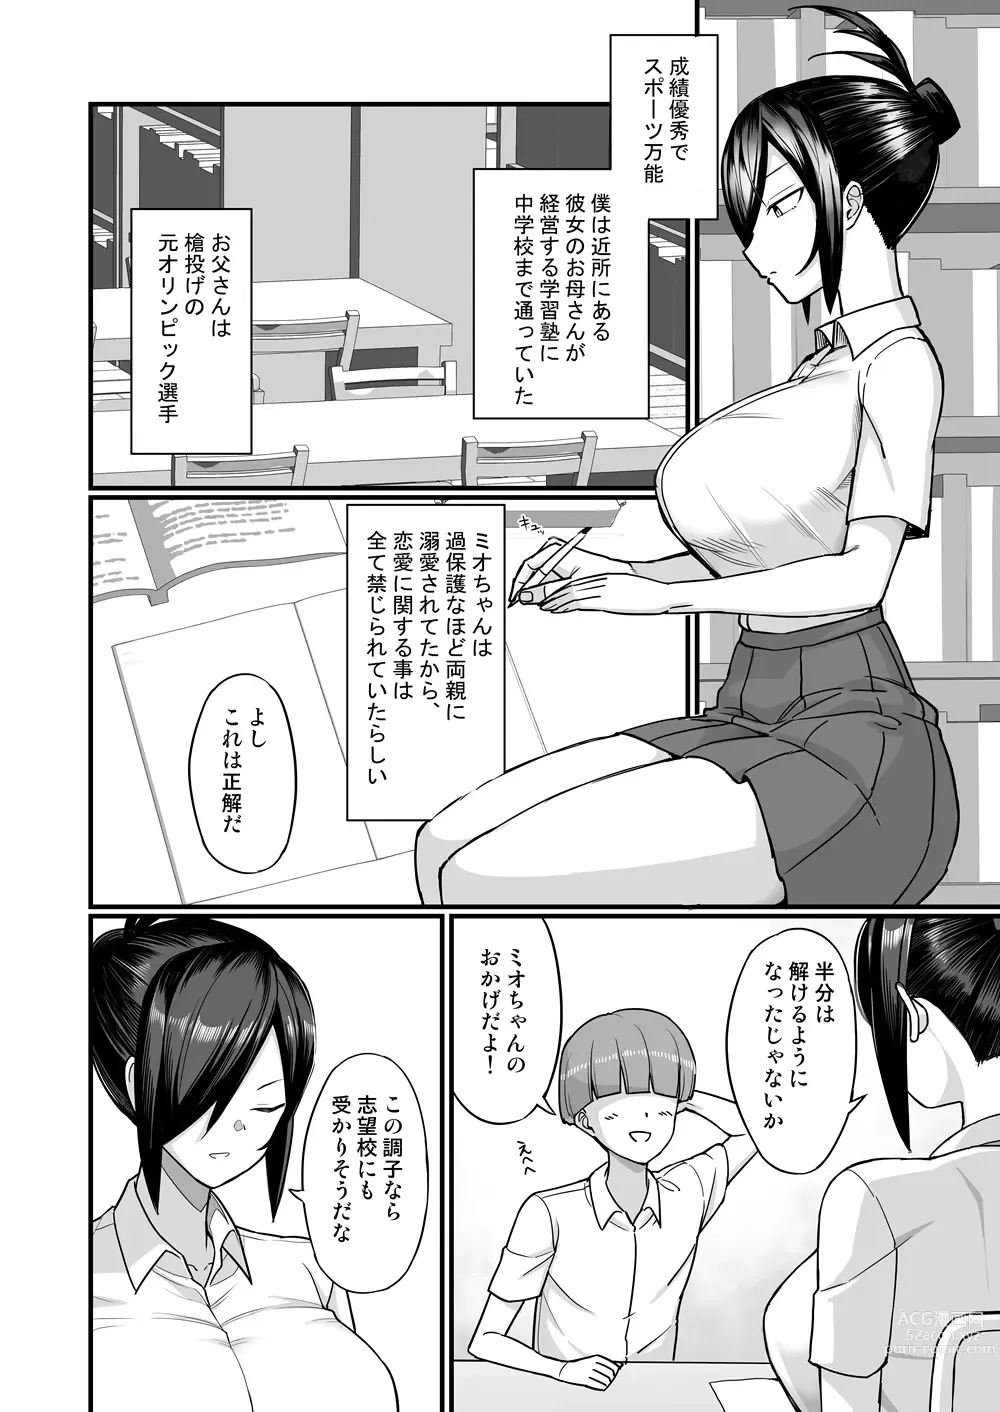 Page 7 of doujinshi NTR Fuuki Iin Mio